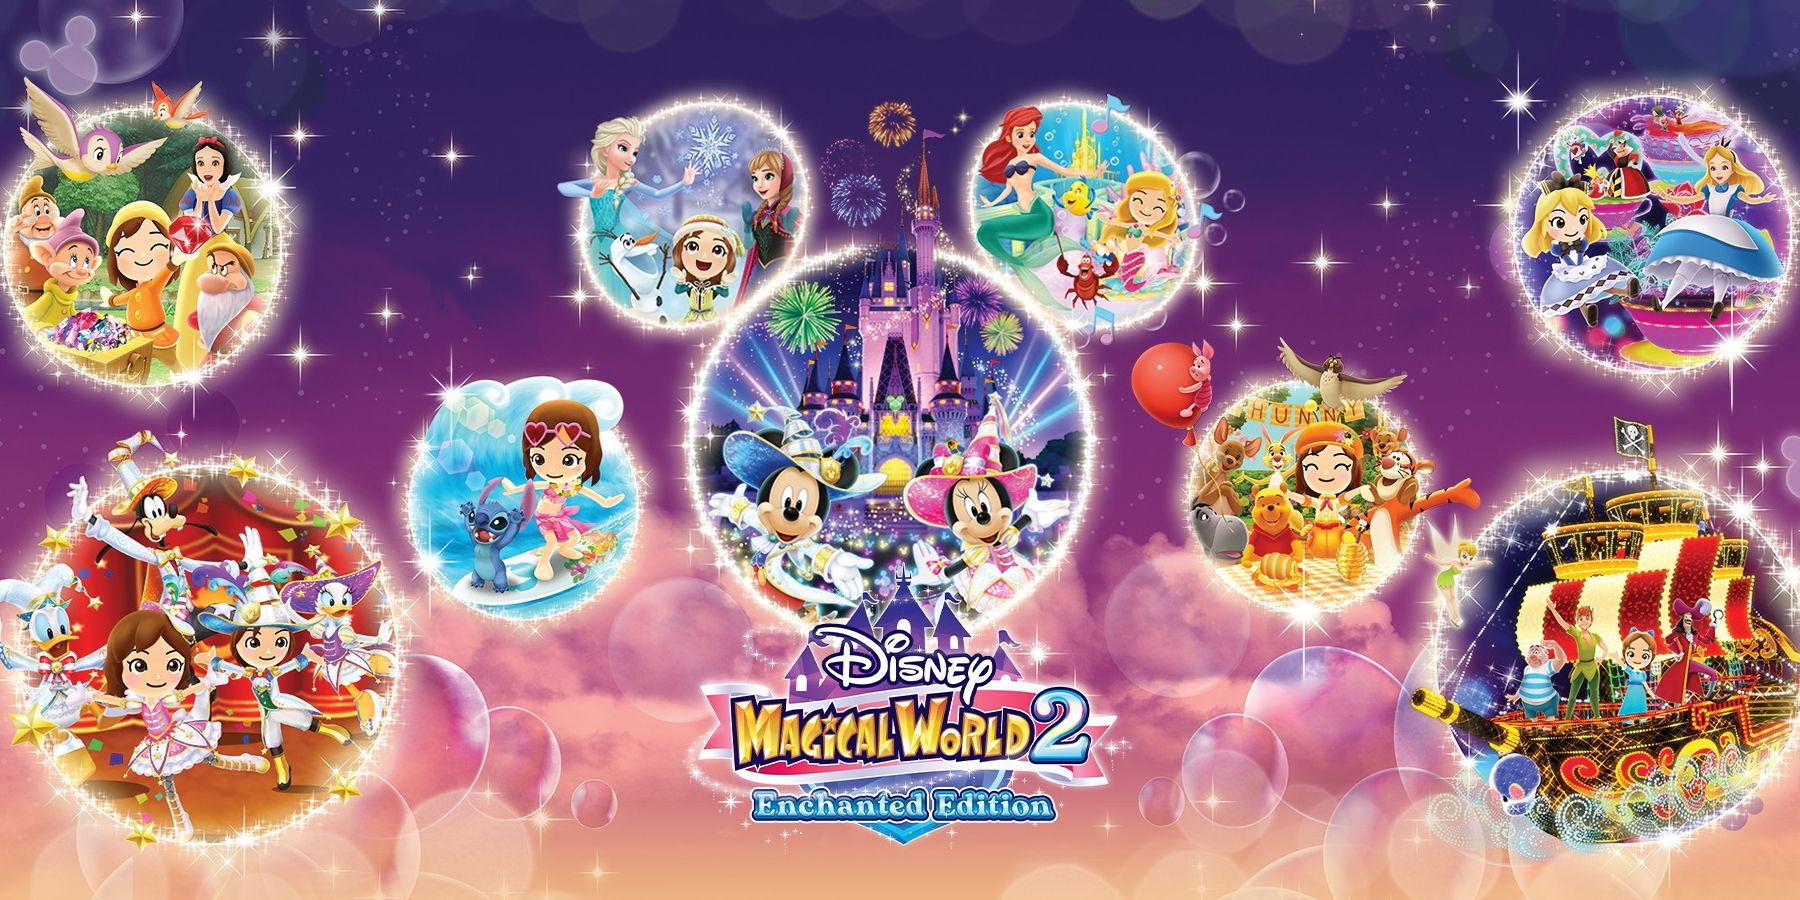 Disney Magical World 2: Enchanted Edition vindo mudar este ano